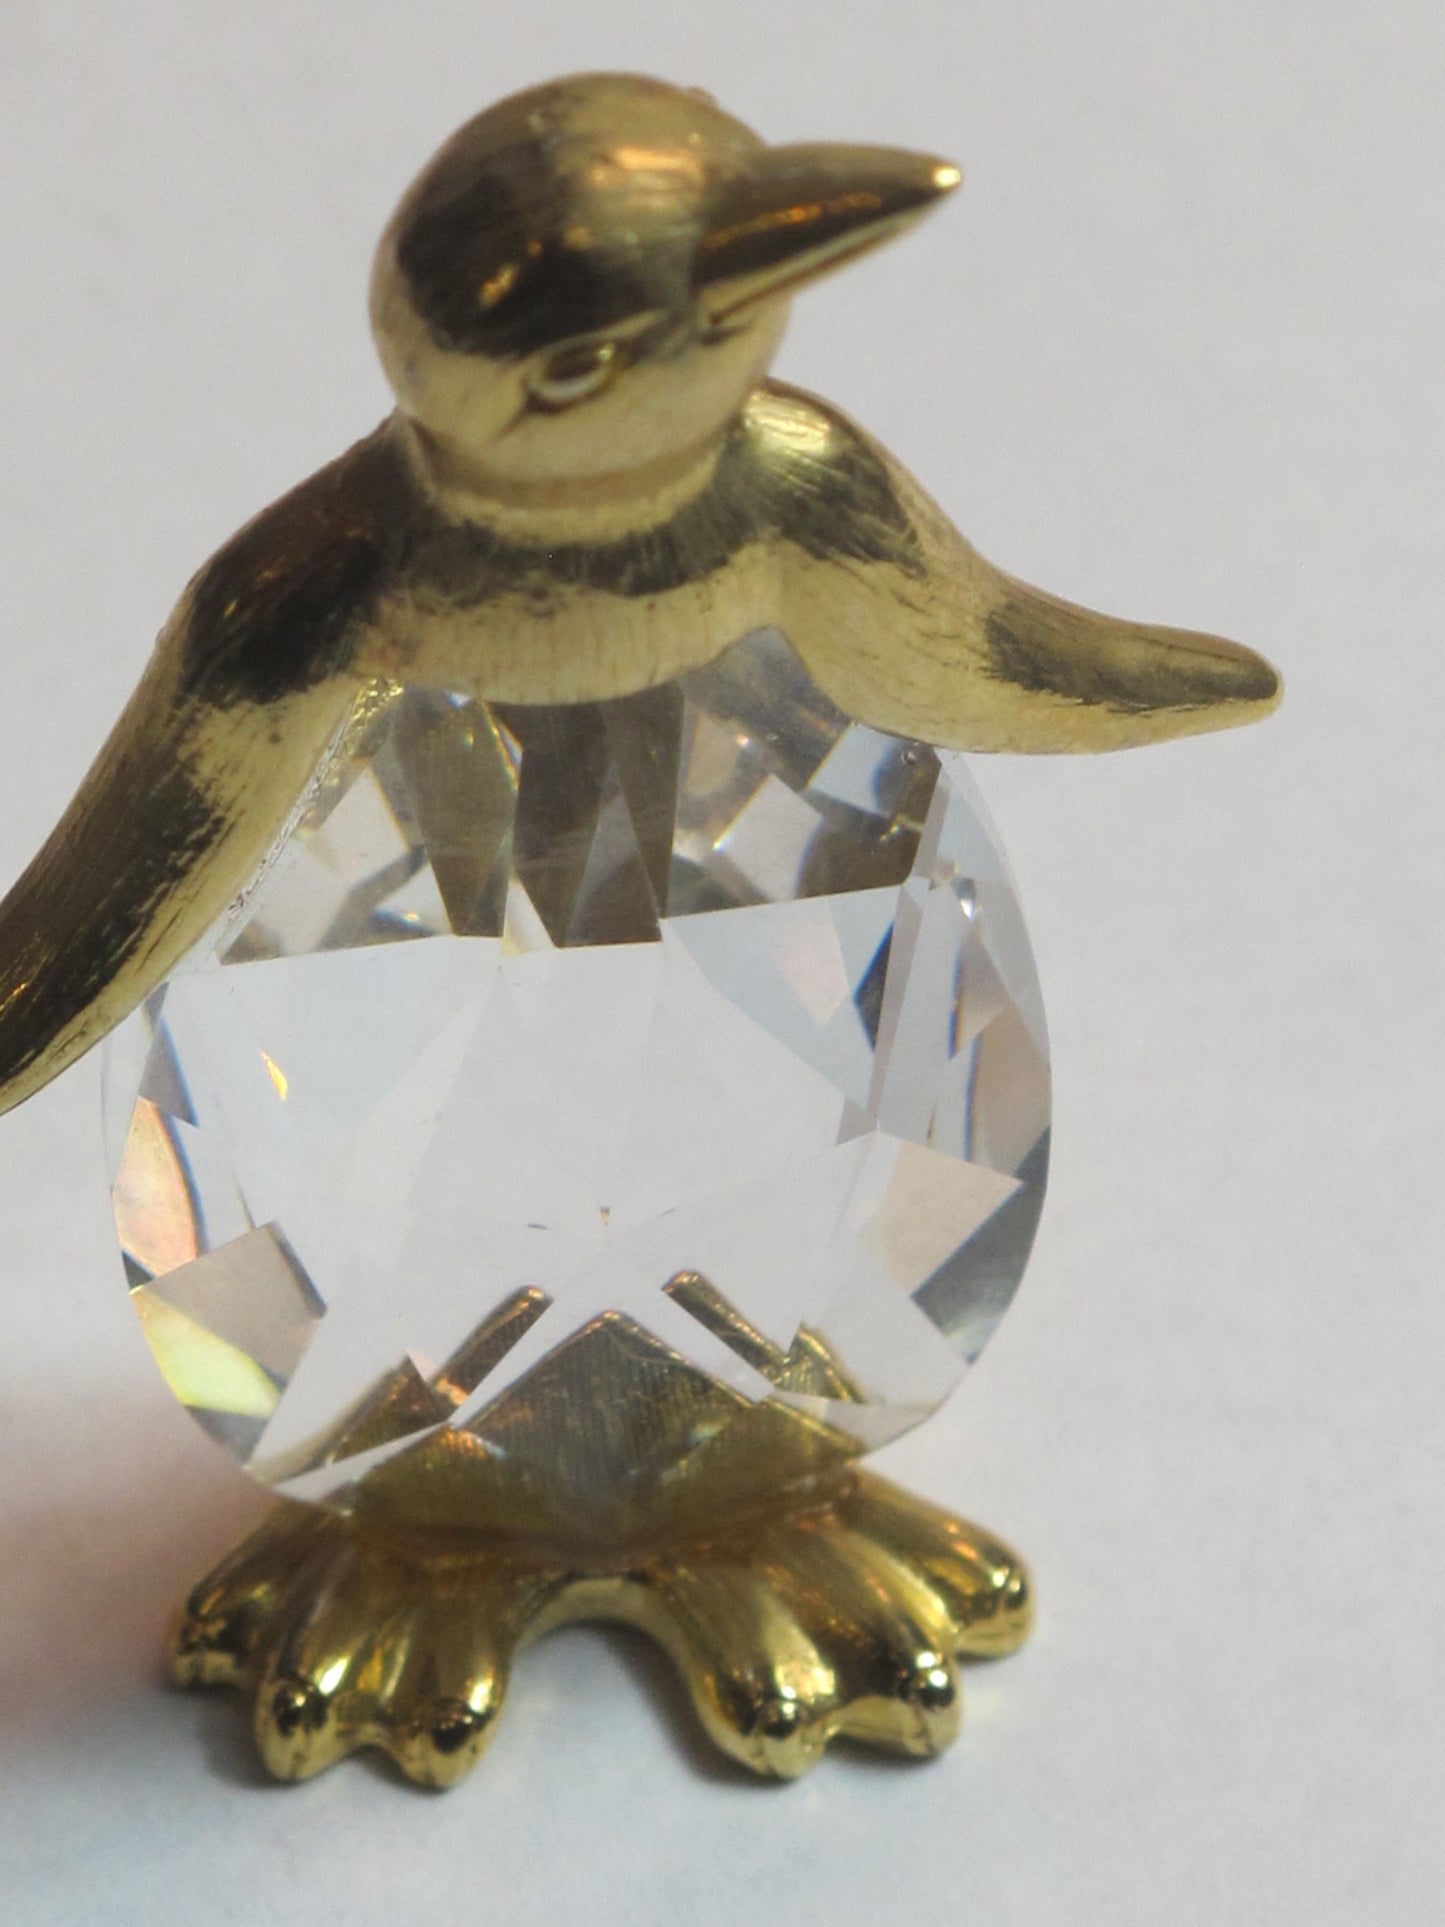 Swarovski crystal brass Penguin figurine